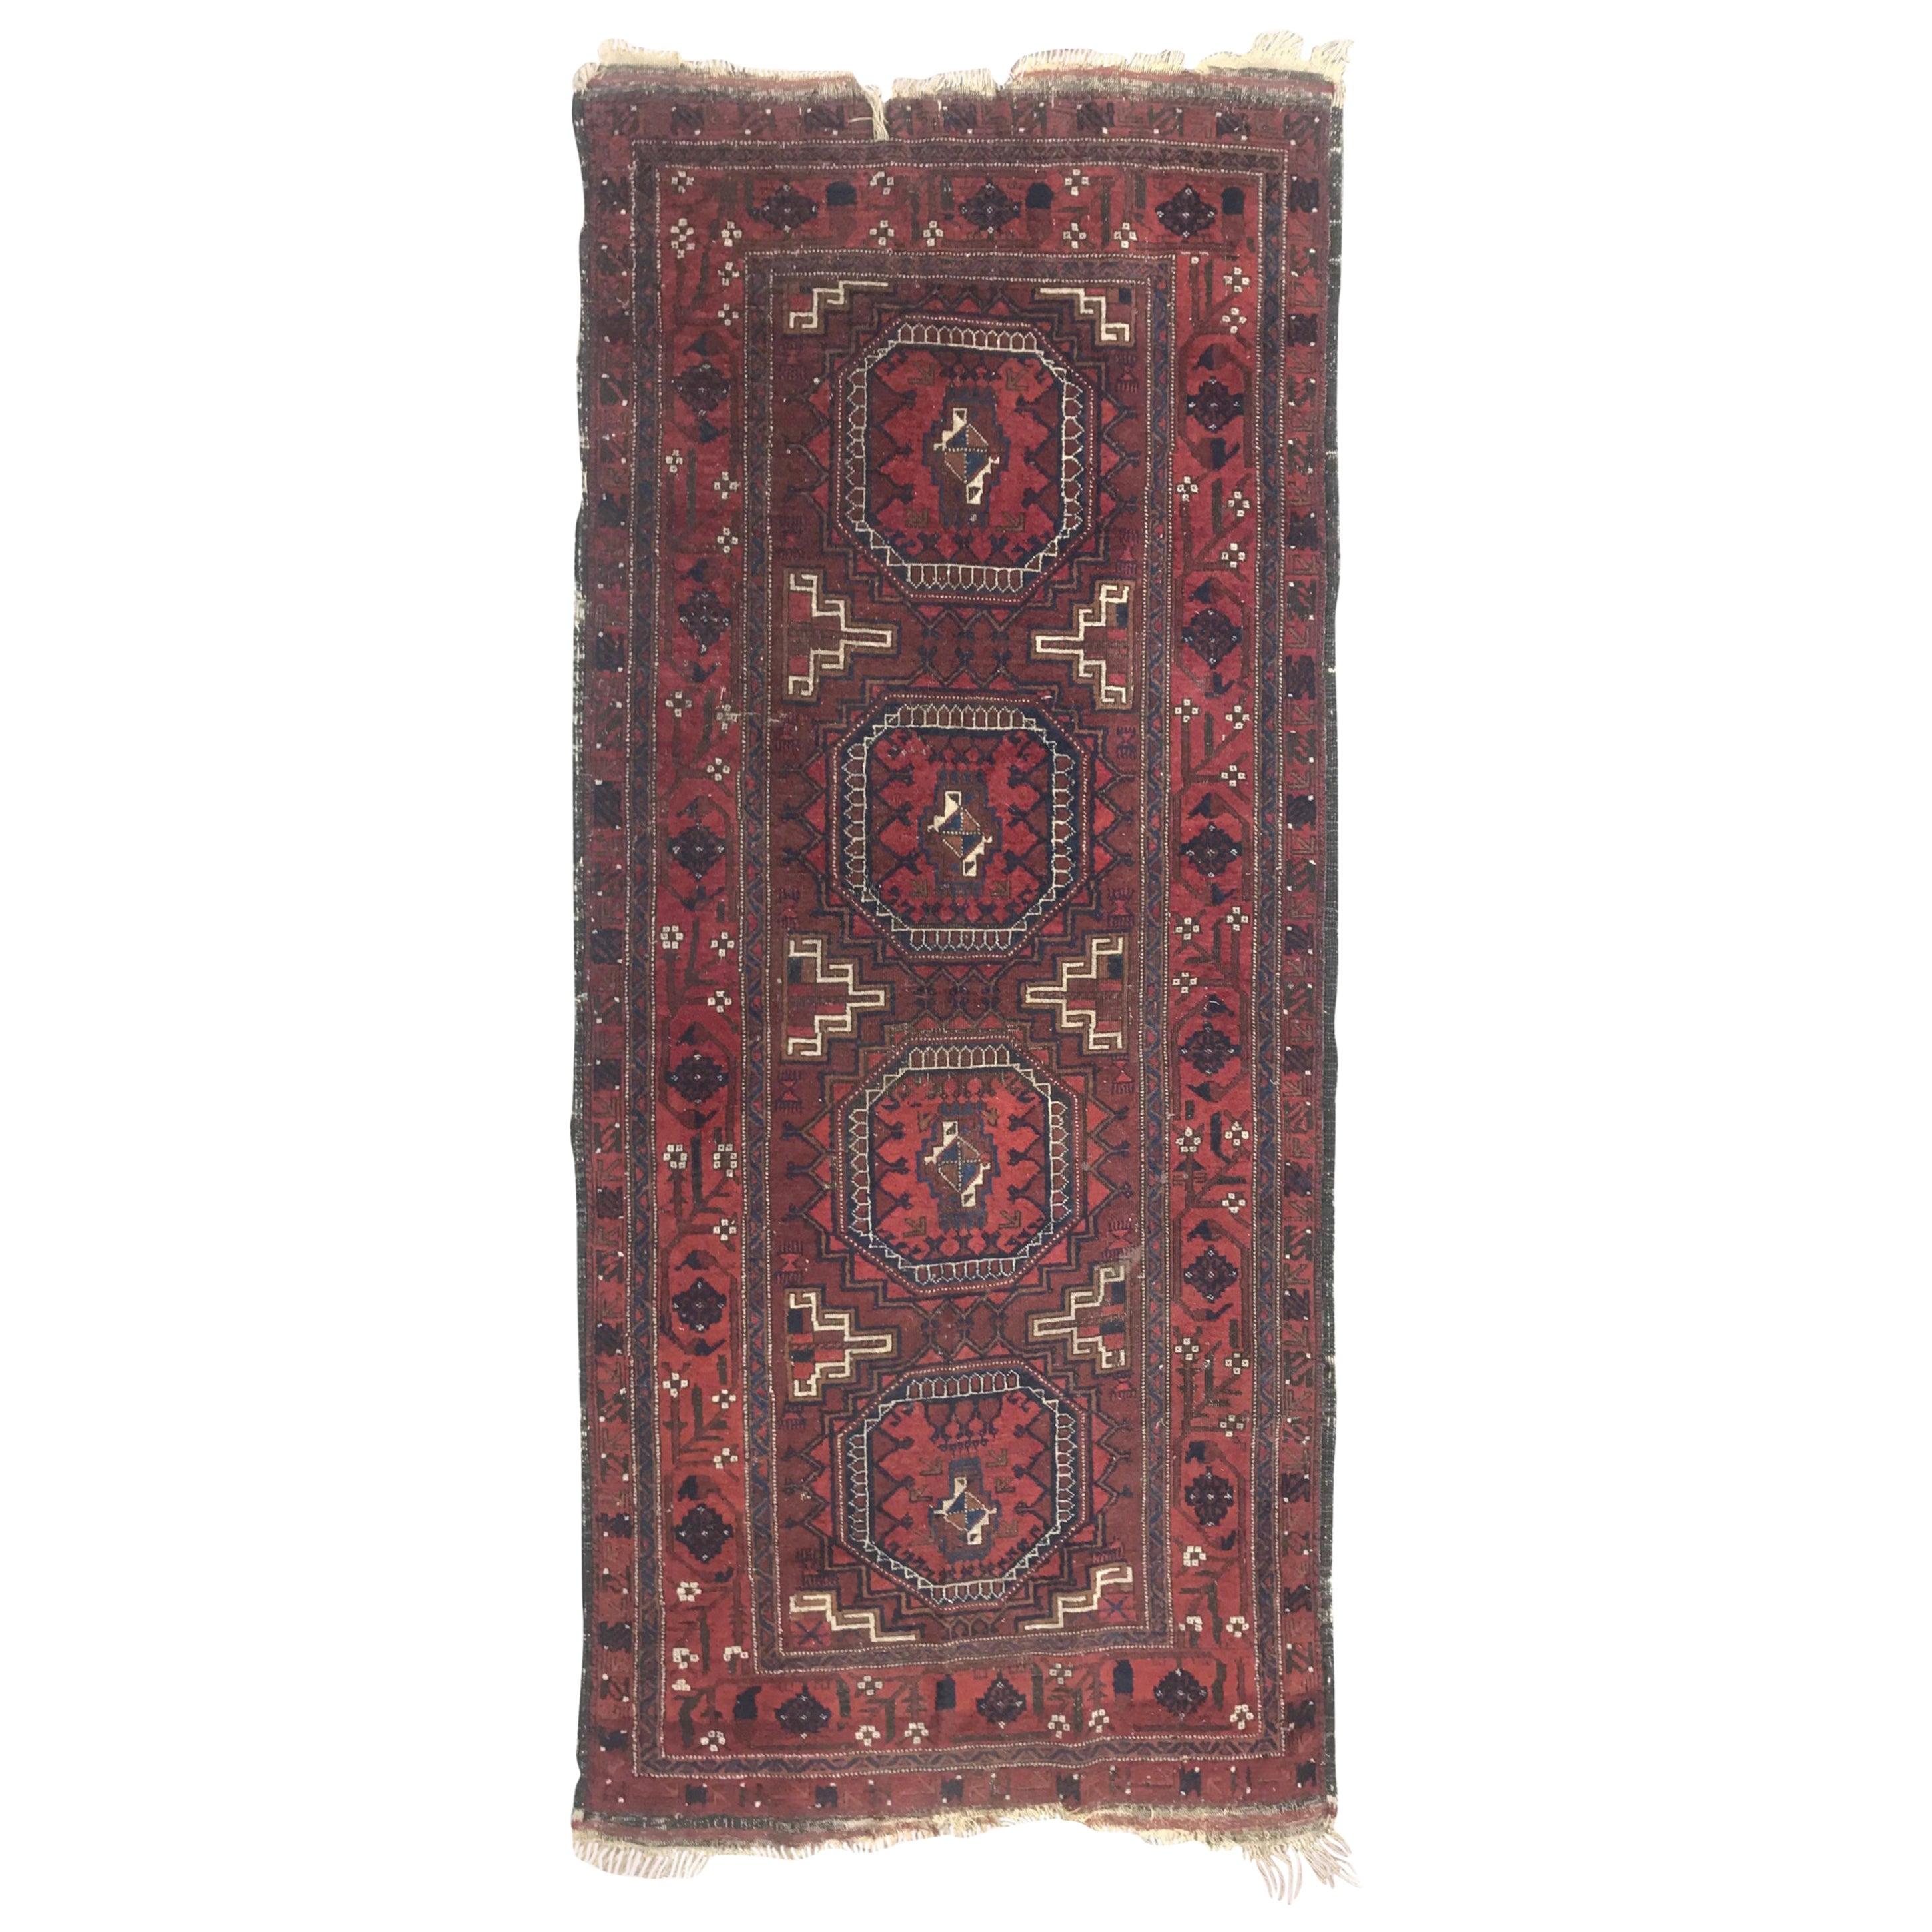 Bobyrug’s Beautiful Antique Fine Turkmen Tribal Rug For Sale